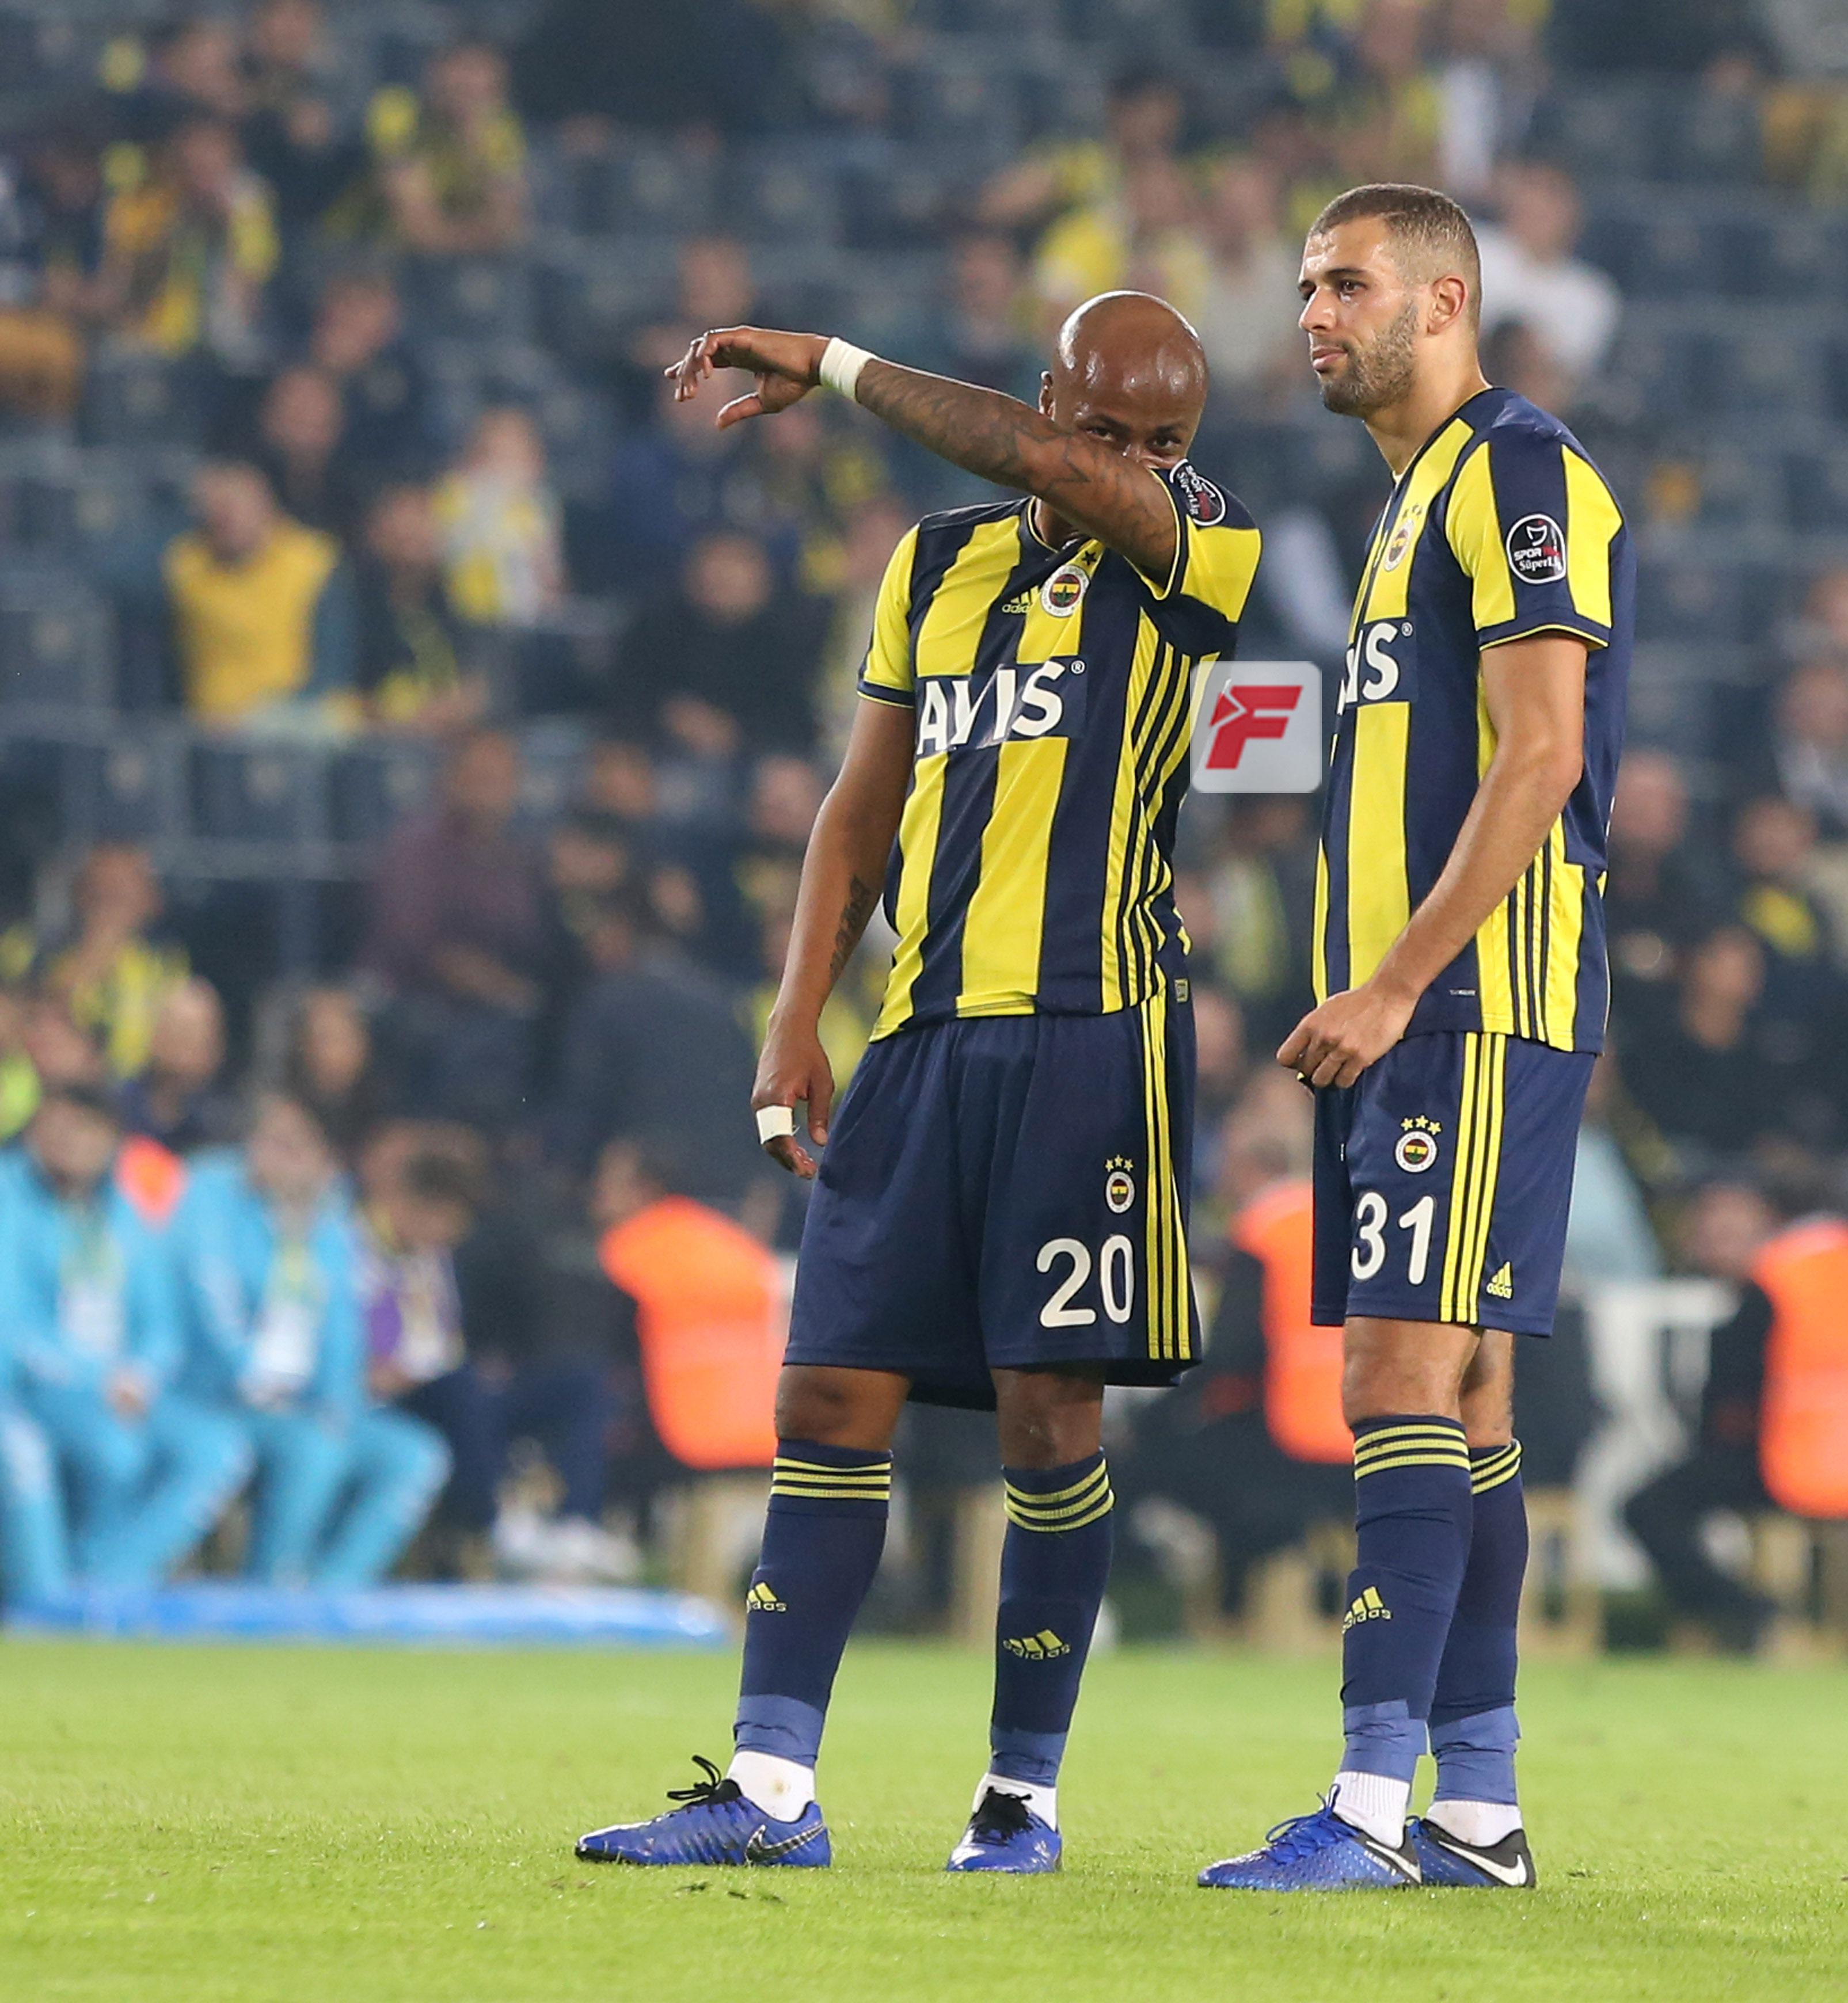 Fenerbahçe - Ankaragücü maç sonucu: 1-3